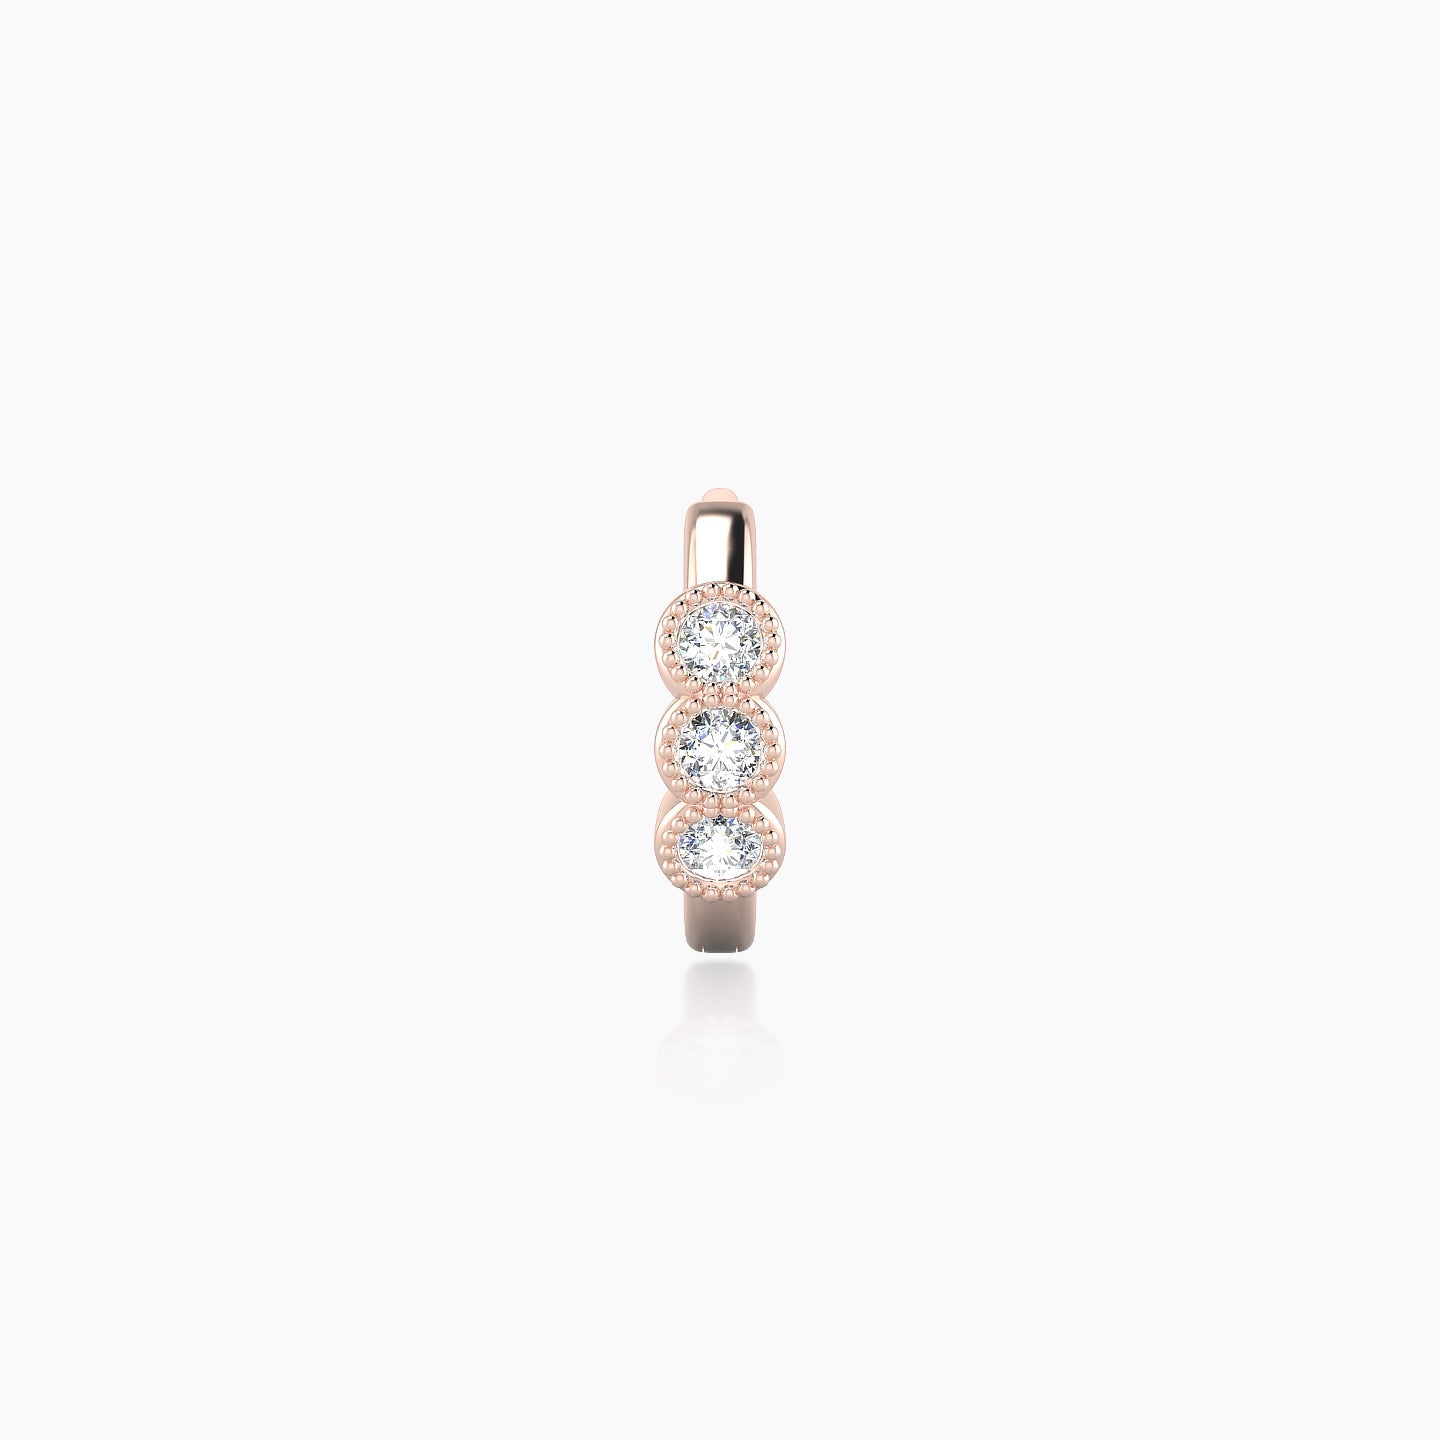 Irene | 18k Rose Gold 6.5 mm Trilogy Diamond Nose Ring Piercing